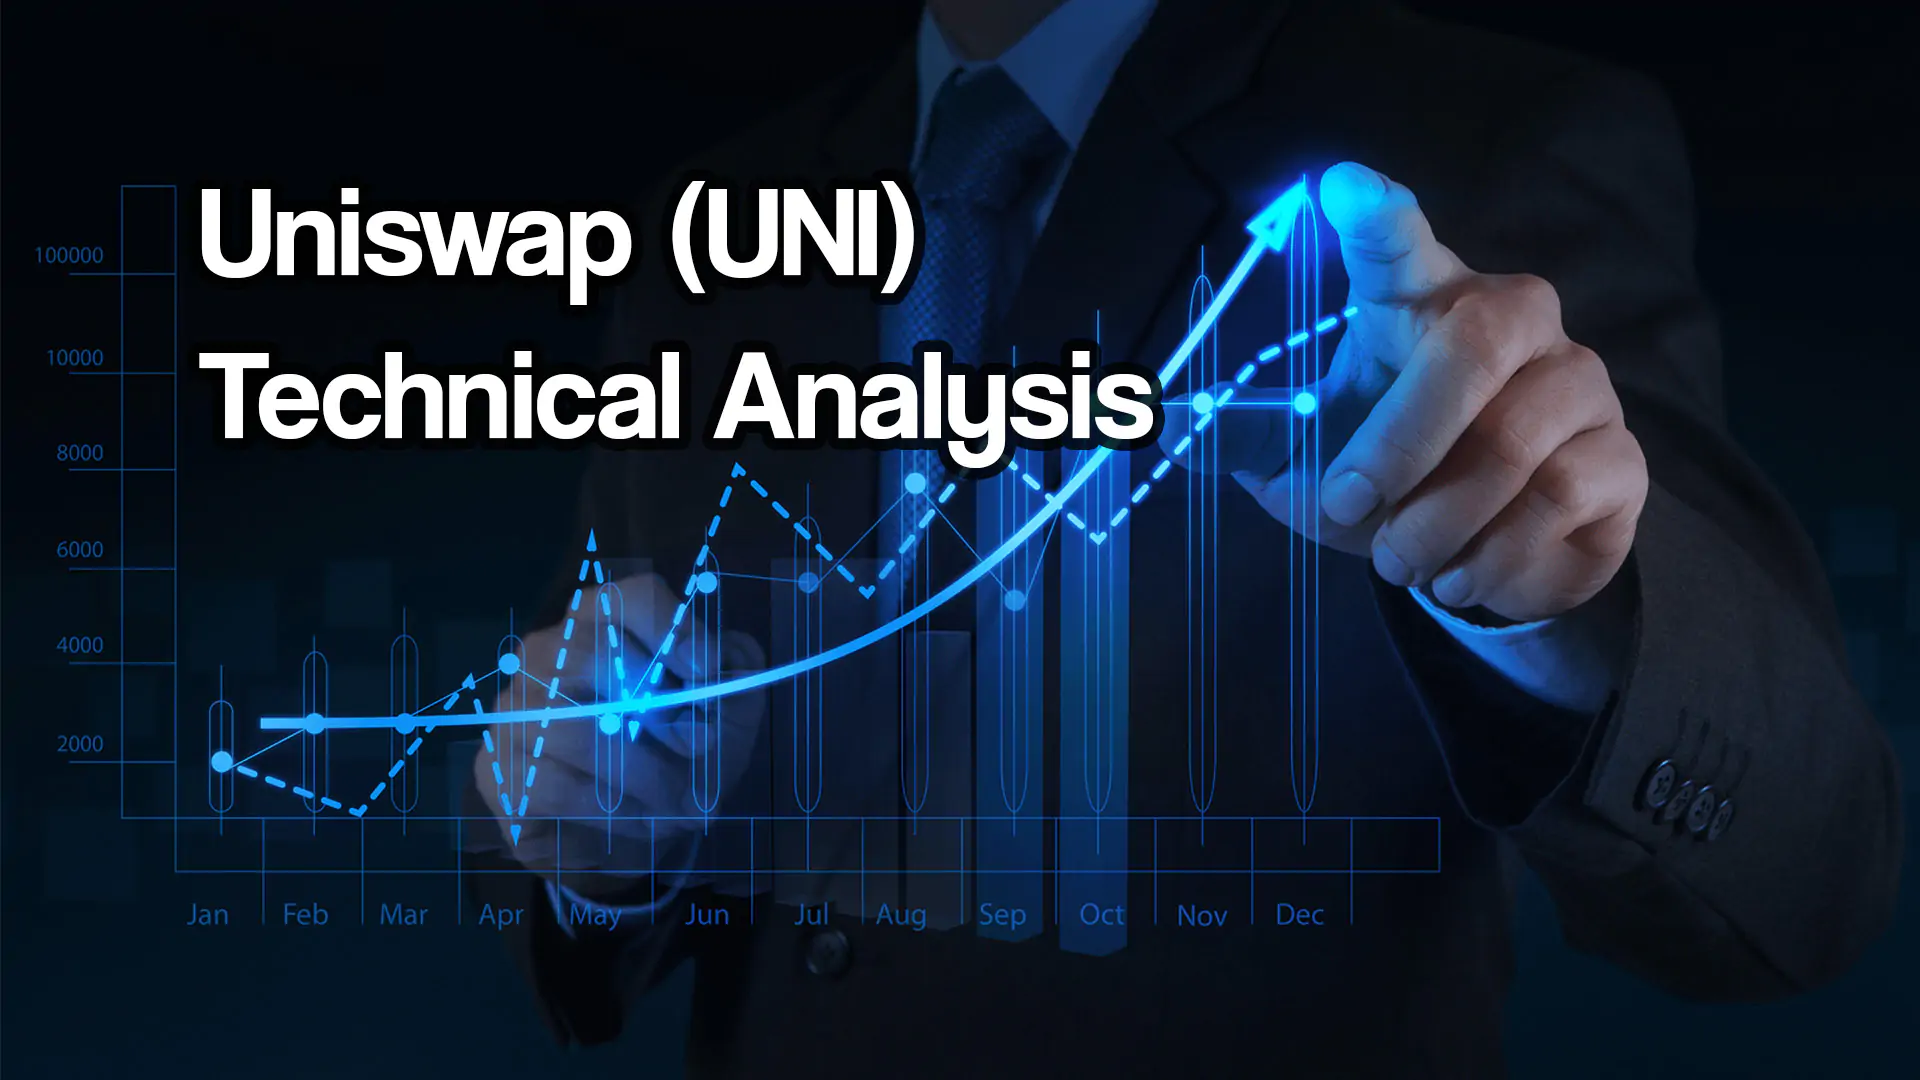 Uniswap (UNI) Technical Analysis